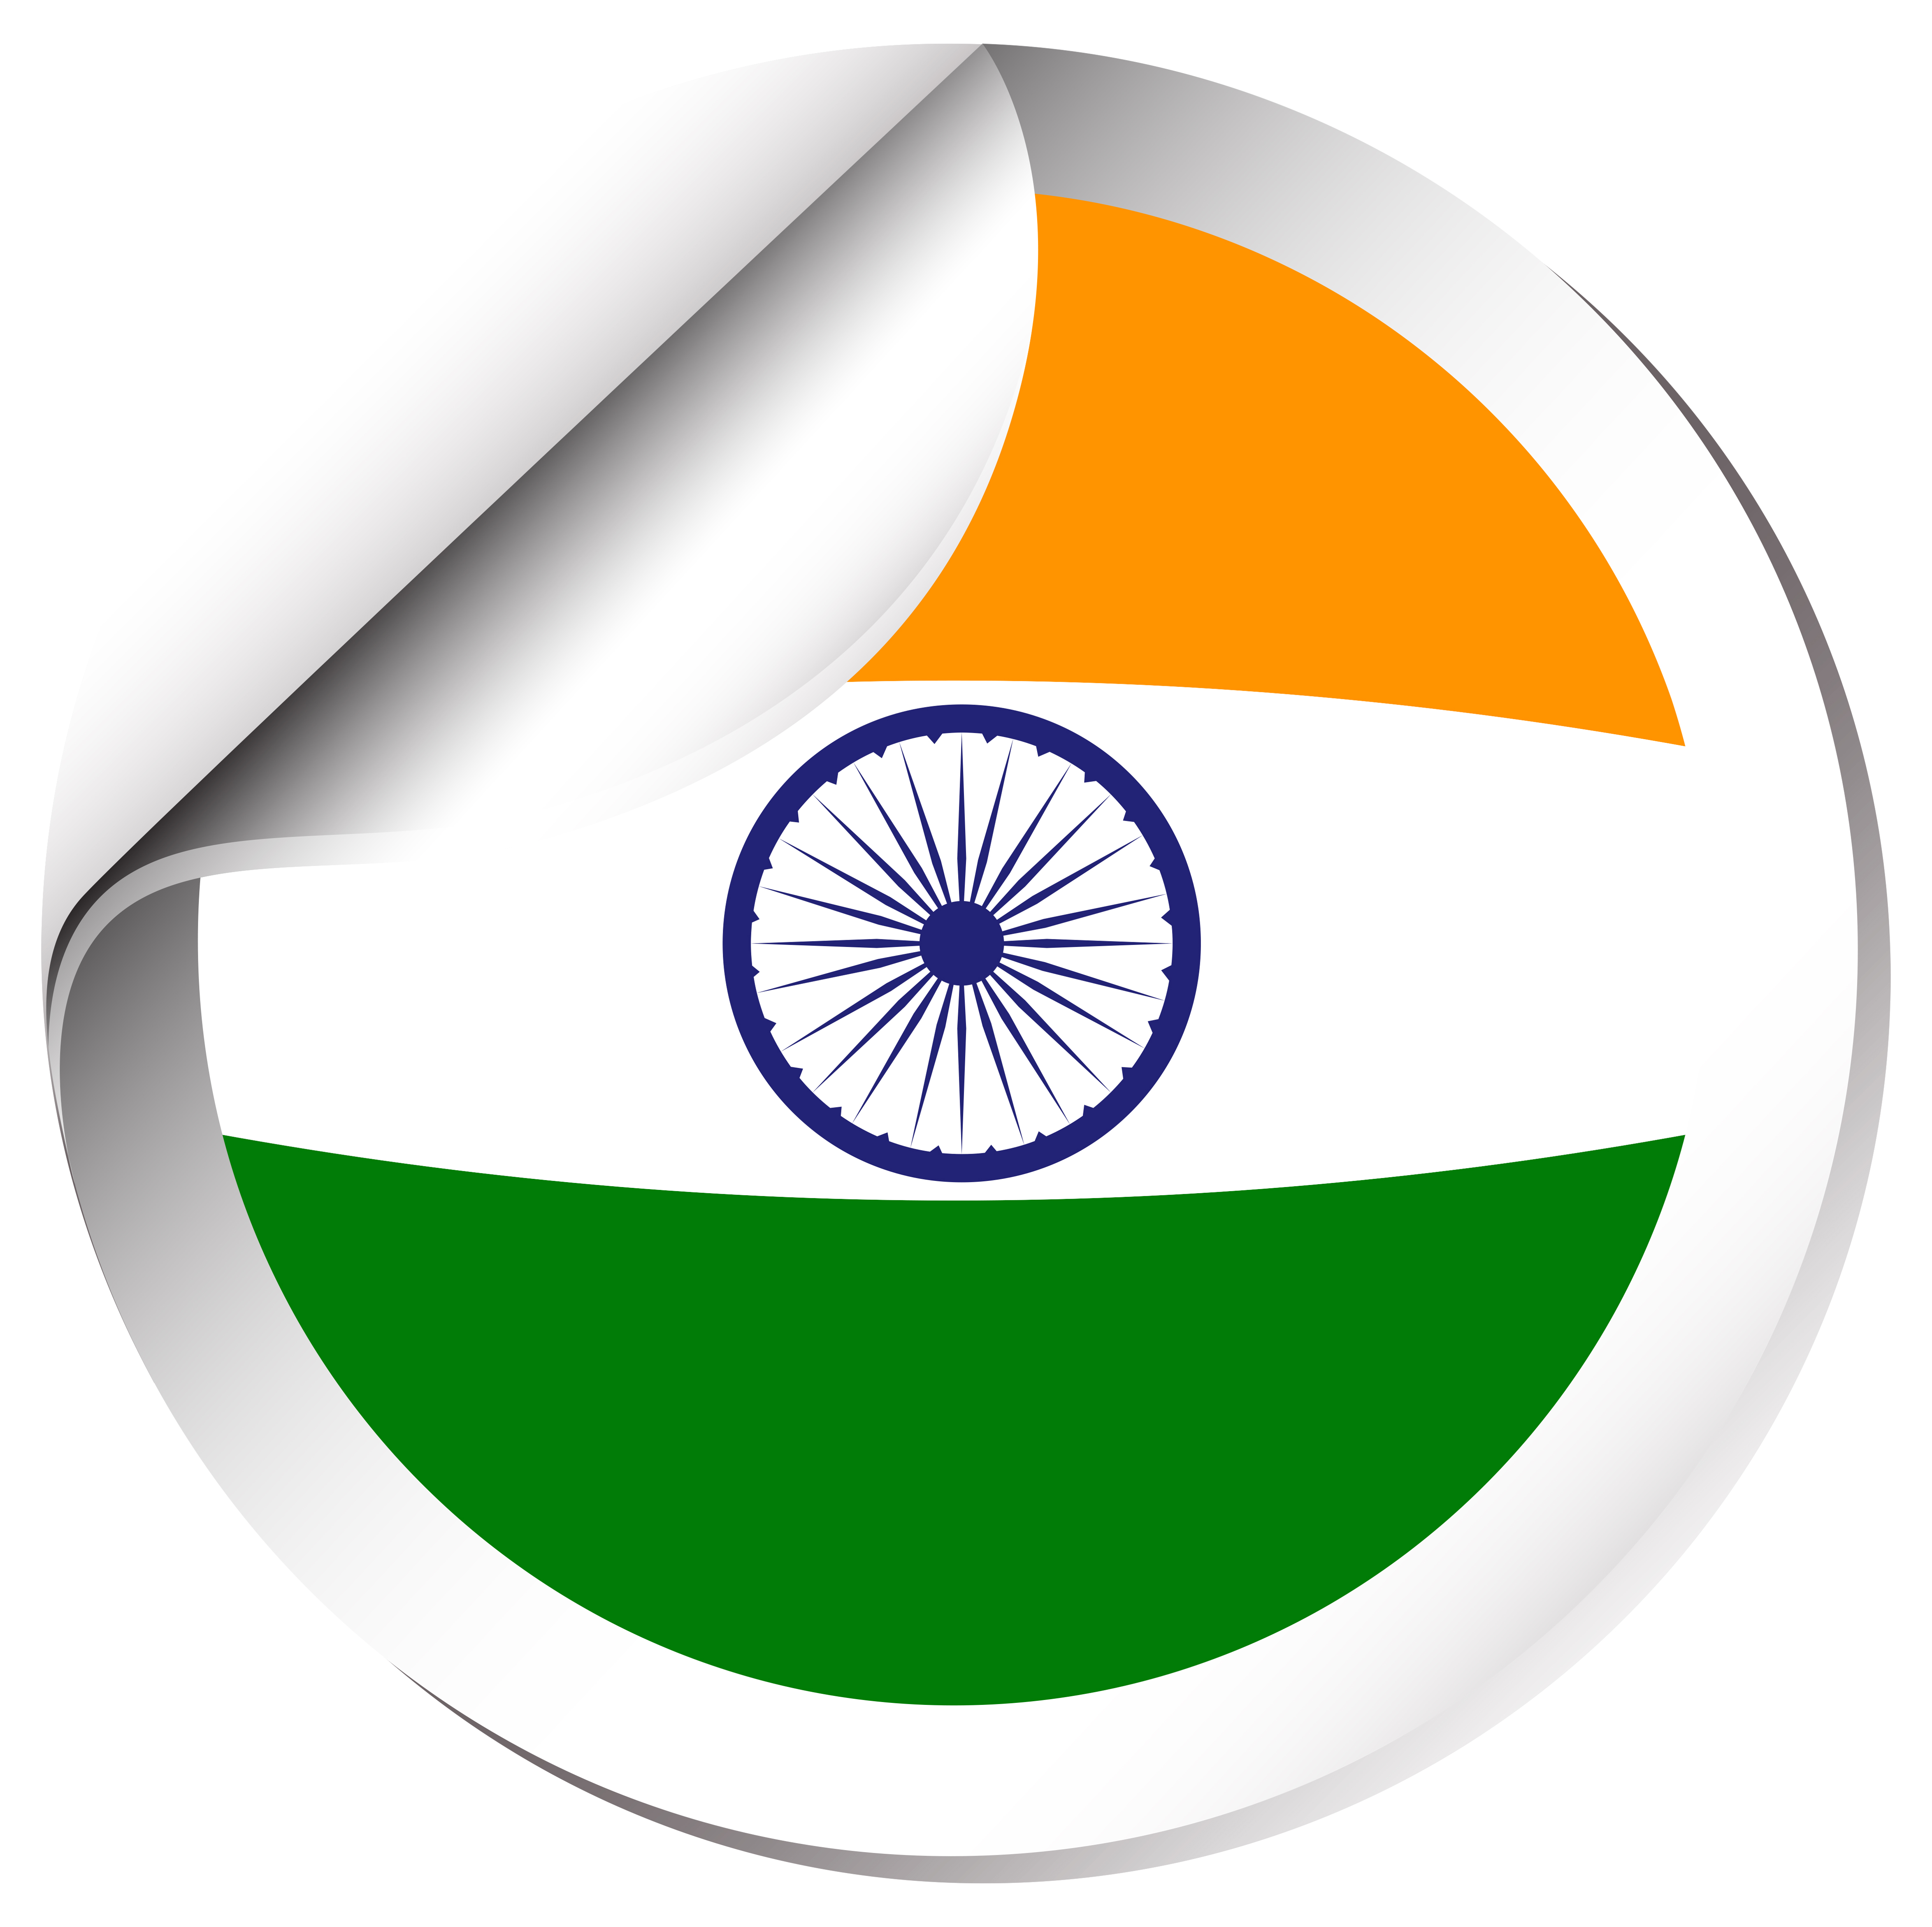 Download Sticker design for India flag - Download Free Vectors ...